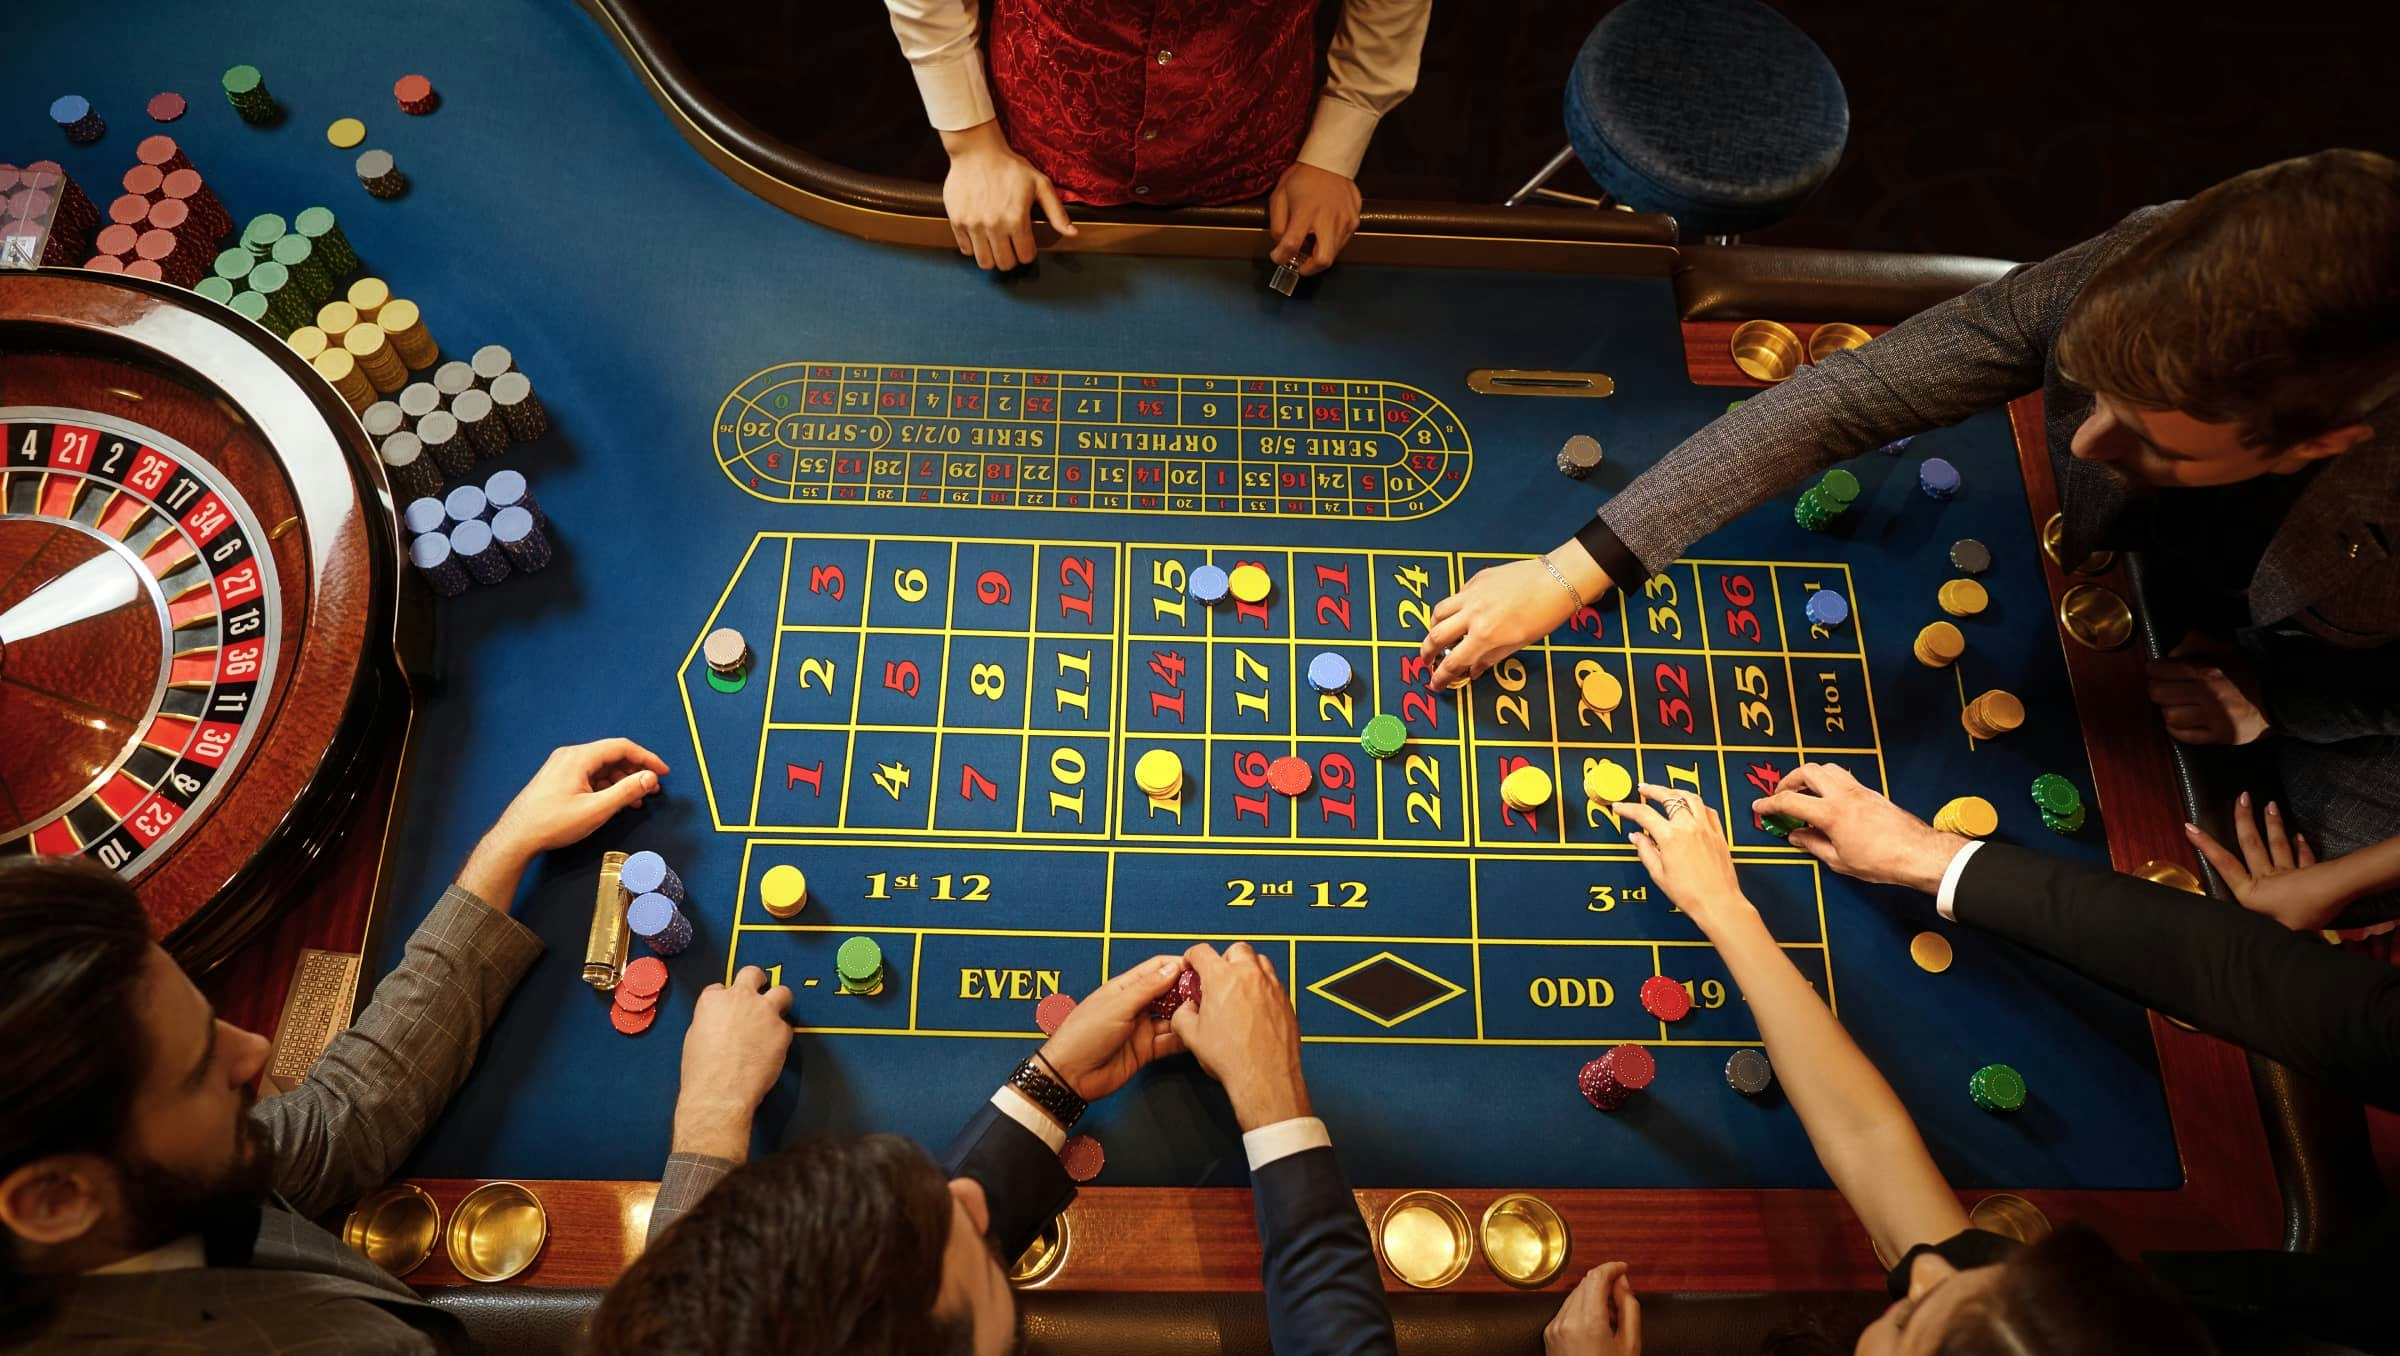 Live casino etiquette: The unspoken rules of live dealer games